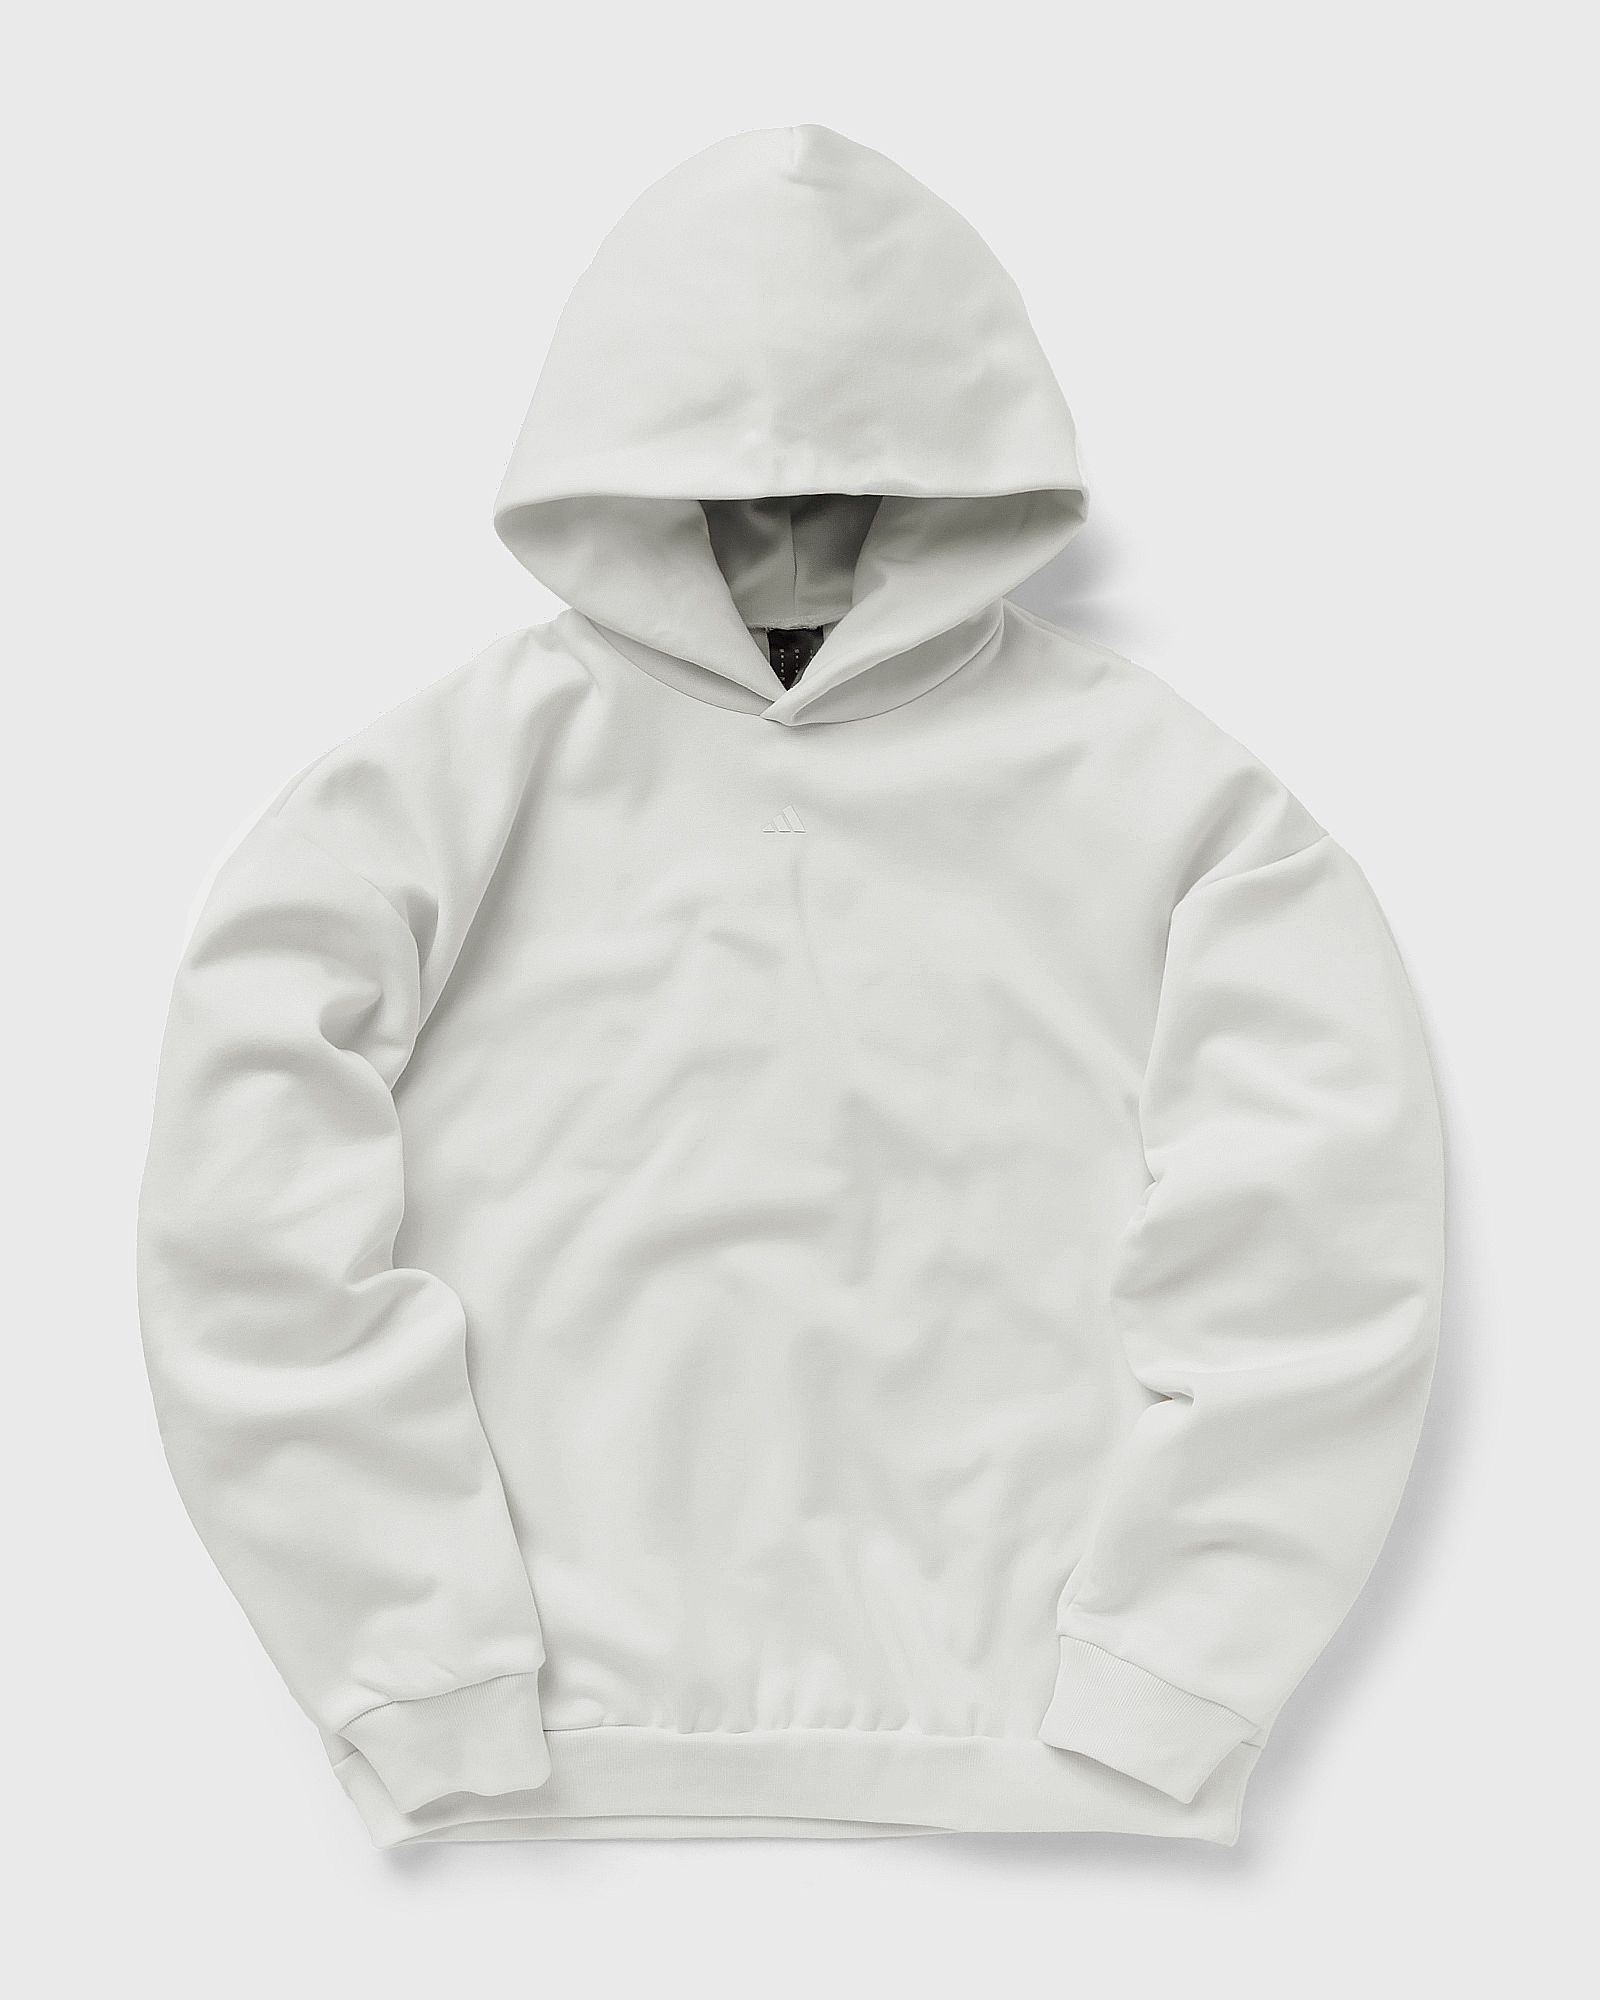 Adidas - one basketball fl hoody men hoodies white in größe:xxl